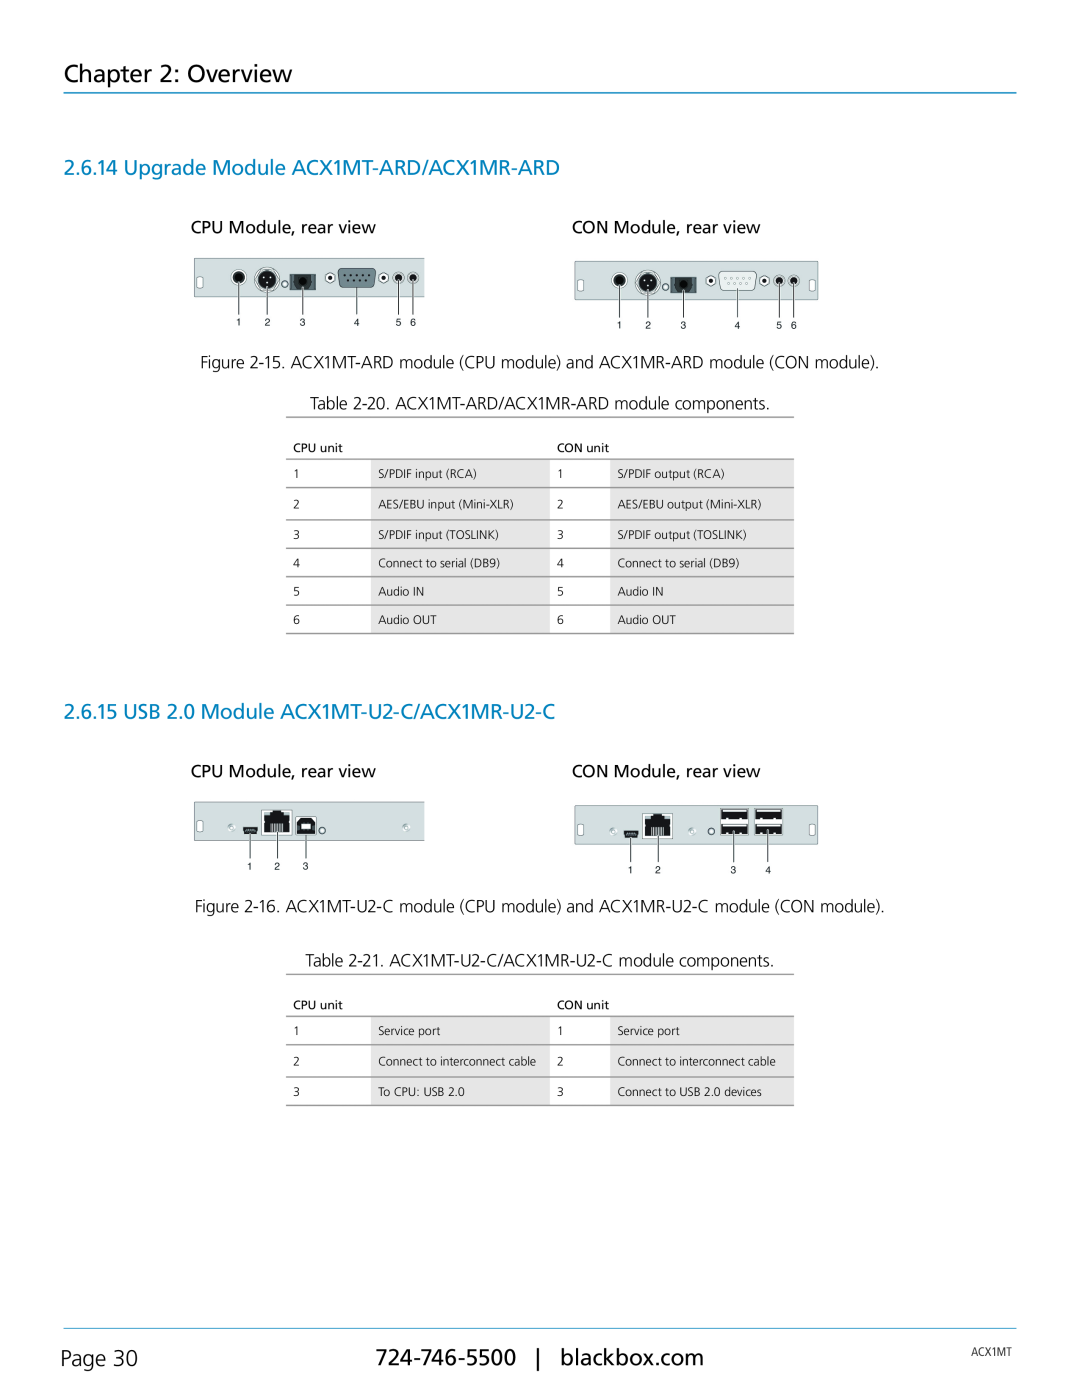 Black Box ACXMODH4, ACXMODH2 manual Overview, Upgrade Module ACX1MT-ARD/ACX1MR-ARD, USB 2.0 Module ACX1MT-U2-C/ACX1MR-U2-C 